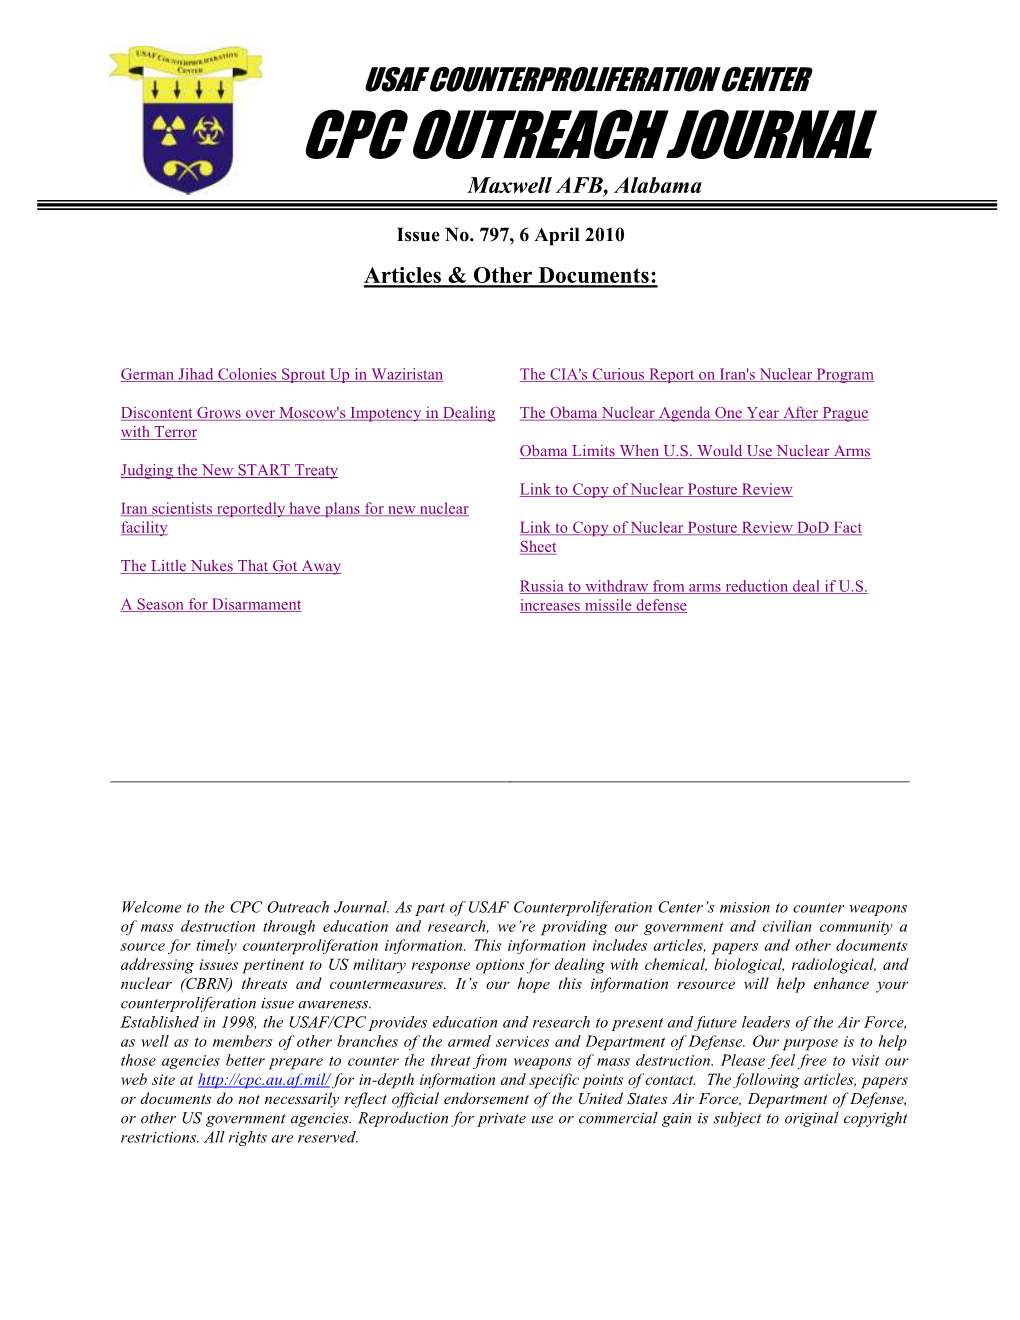 USAF Counterproliferation Center CPC Outreach Journal #797